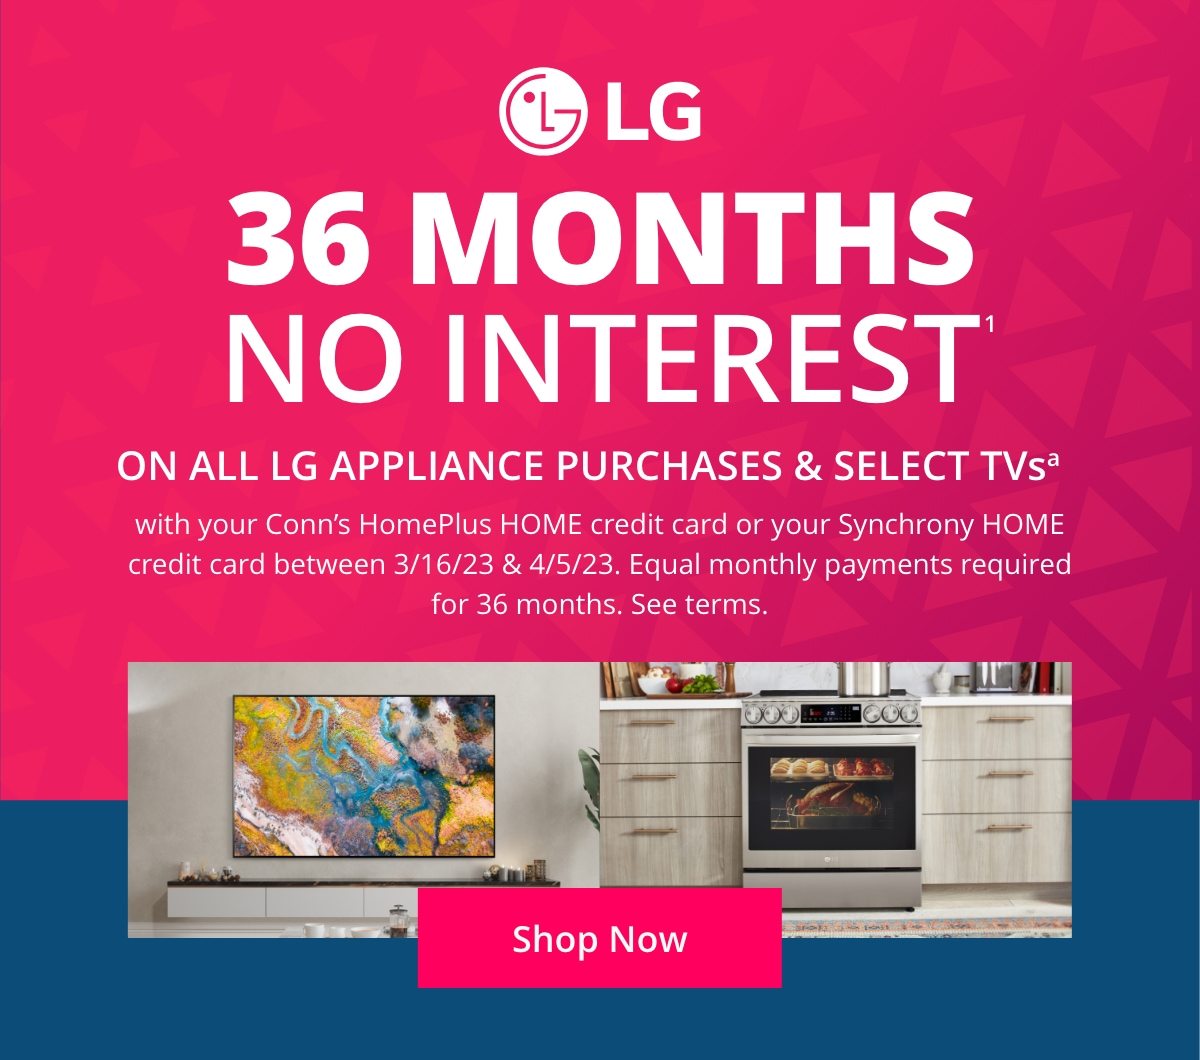 Get 36 months no interest on all LG appliances & select TVs